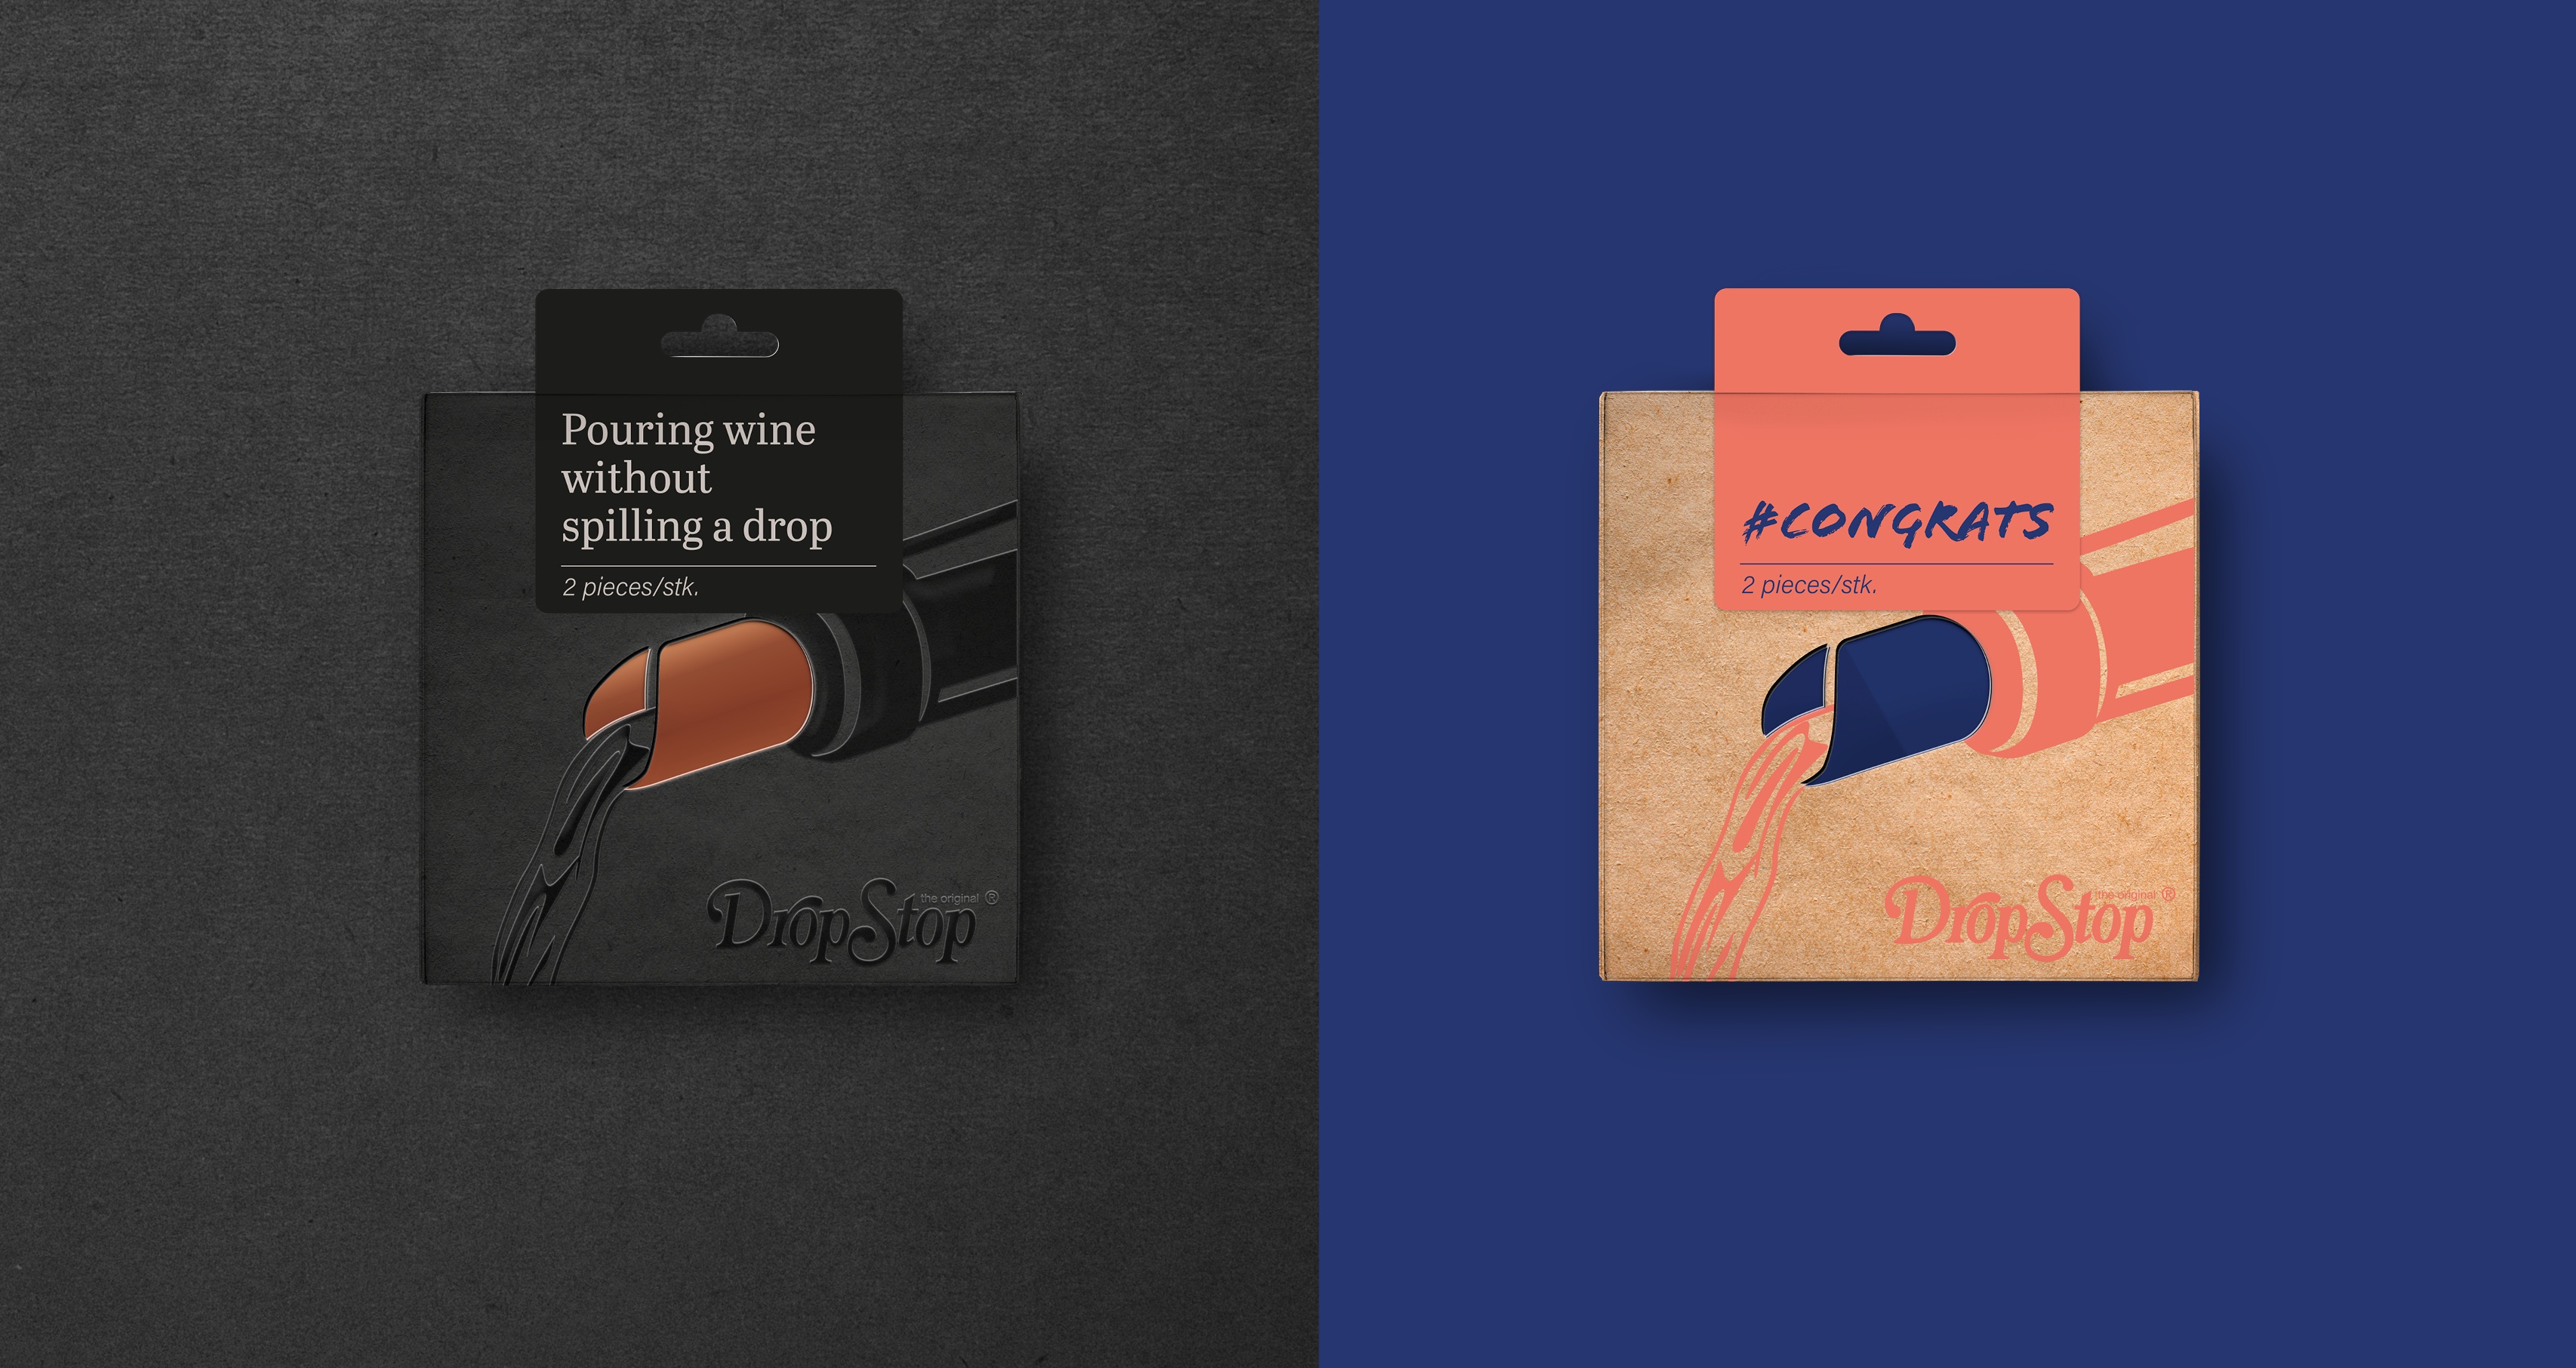 DropStop designs - Emballagedesign - Cameleon Creatives A/S